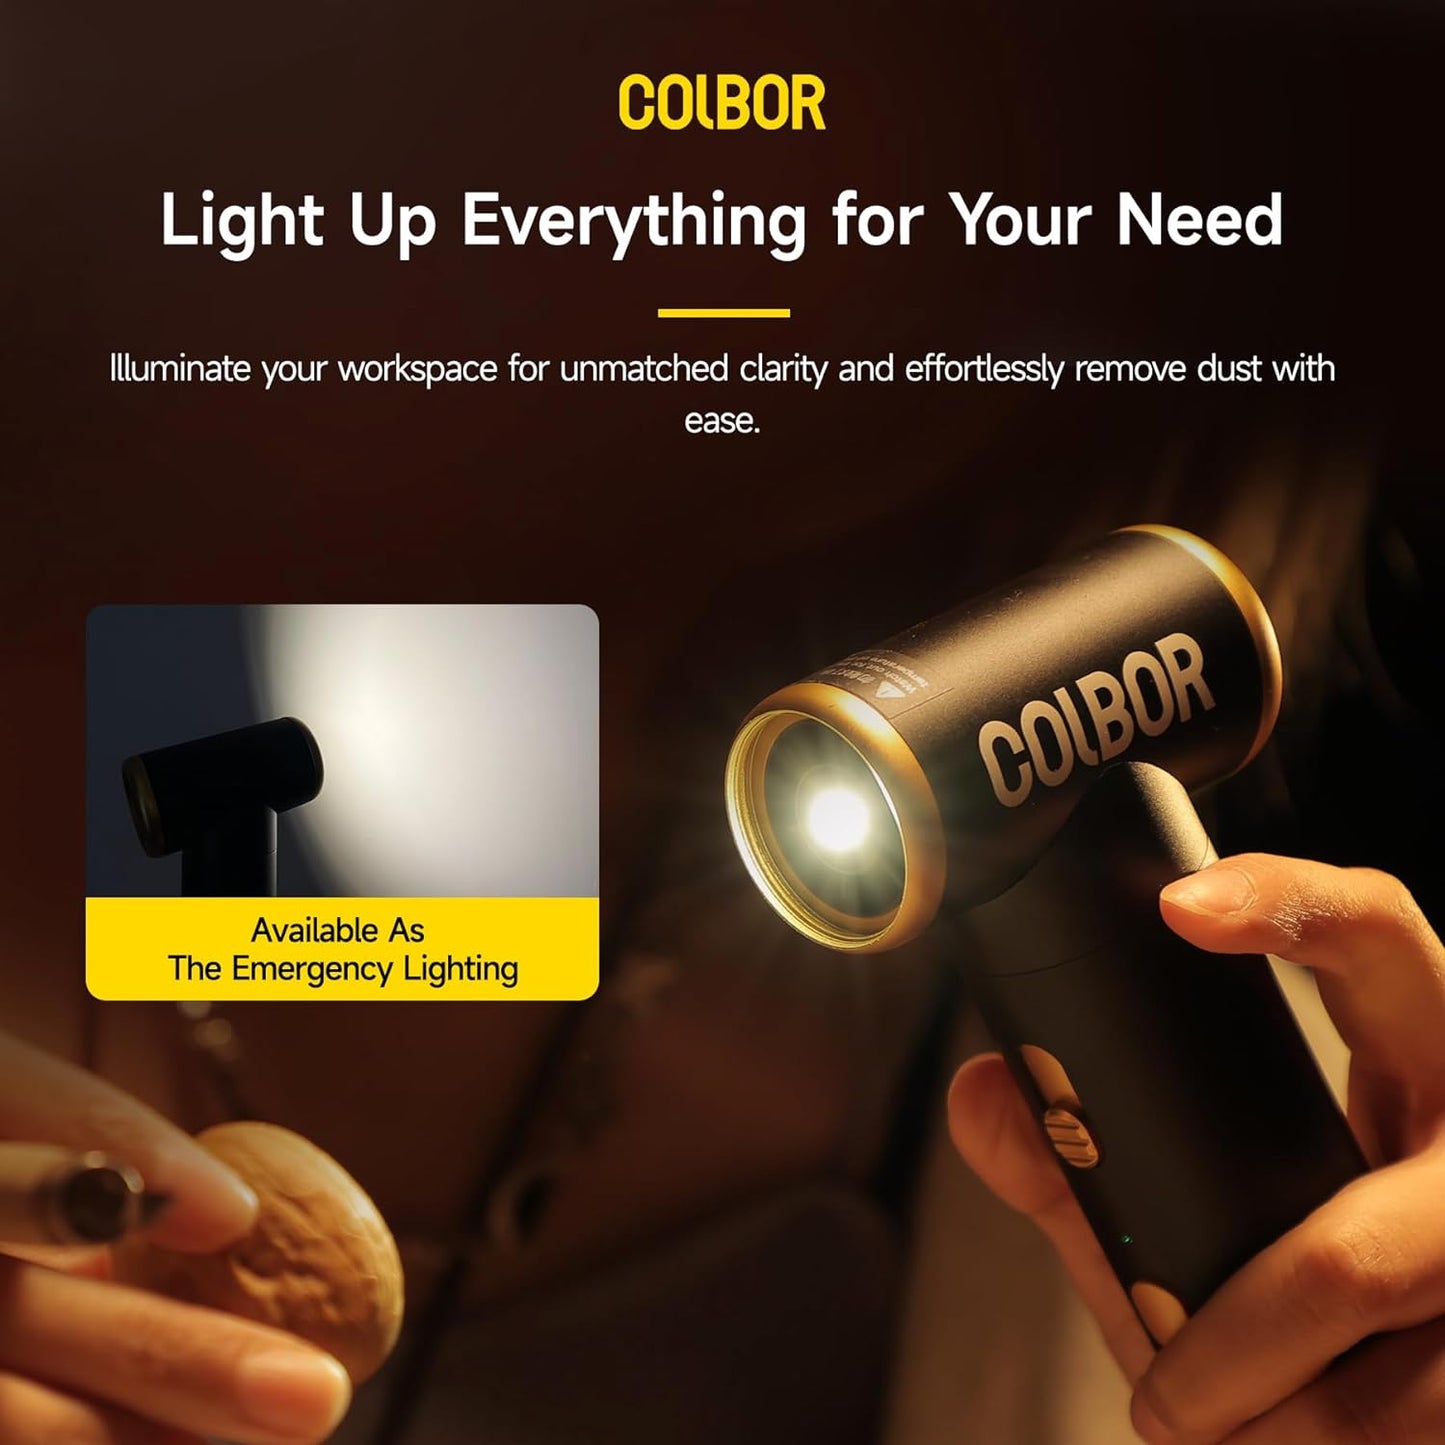 COLBOR Airmaxx A1 ミニジェットファン 電動エアダスター 内蔵LEDライト